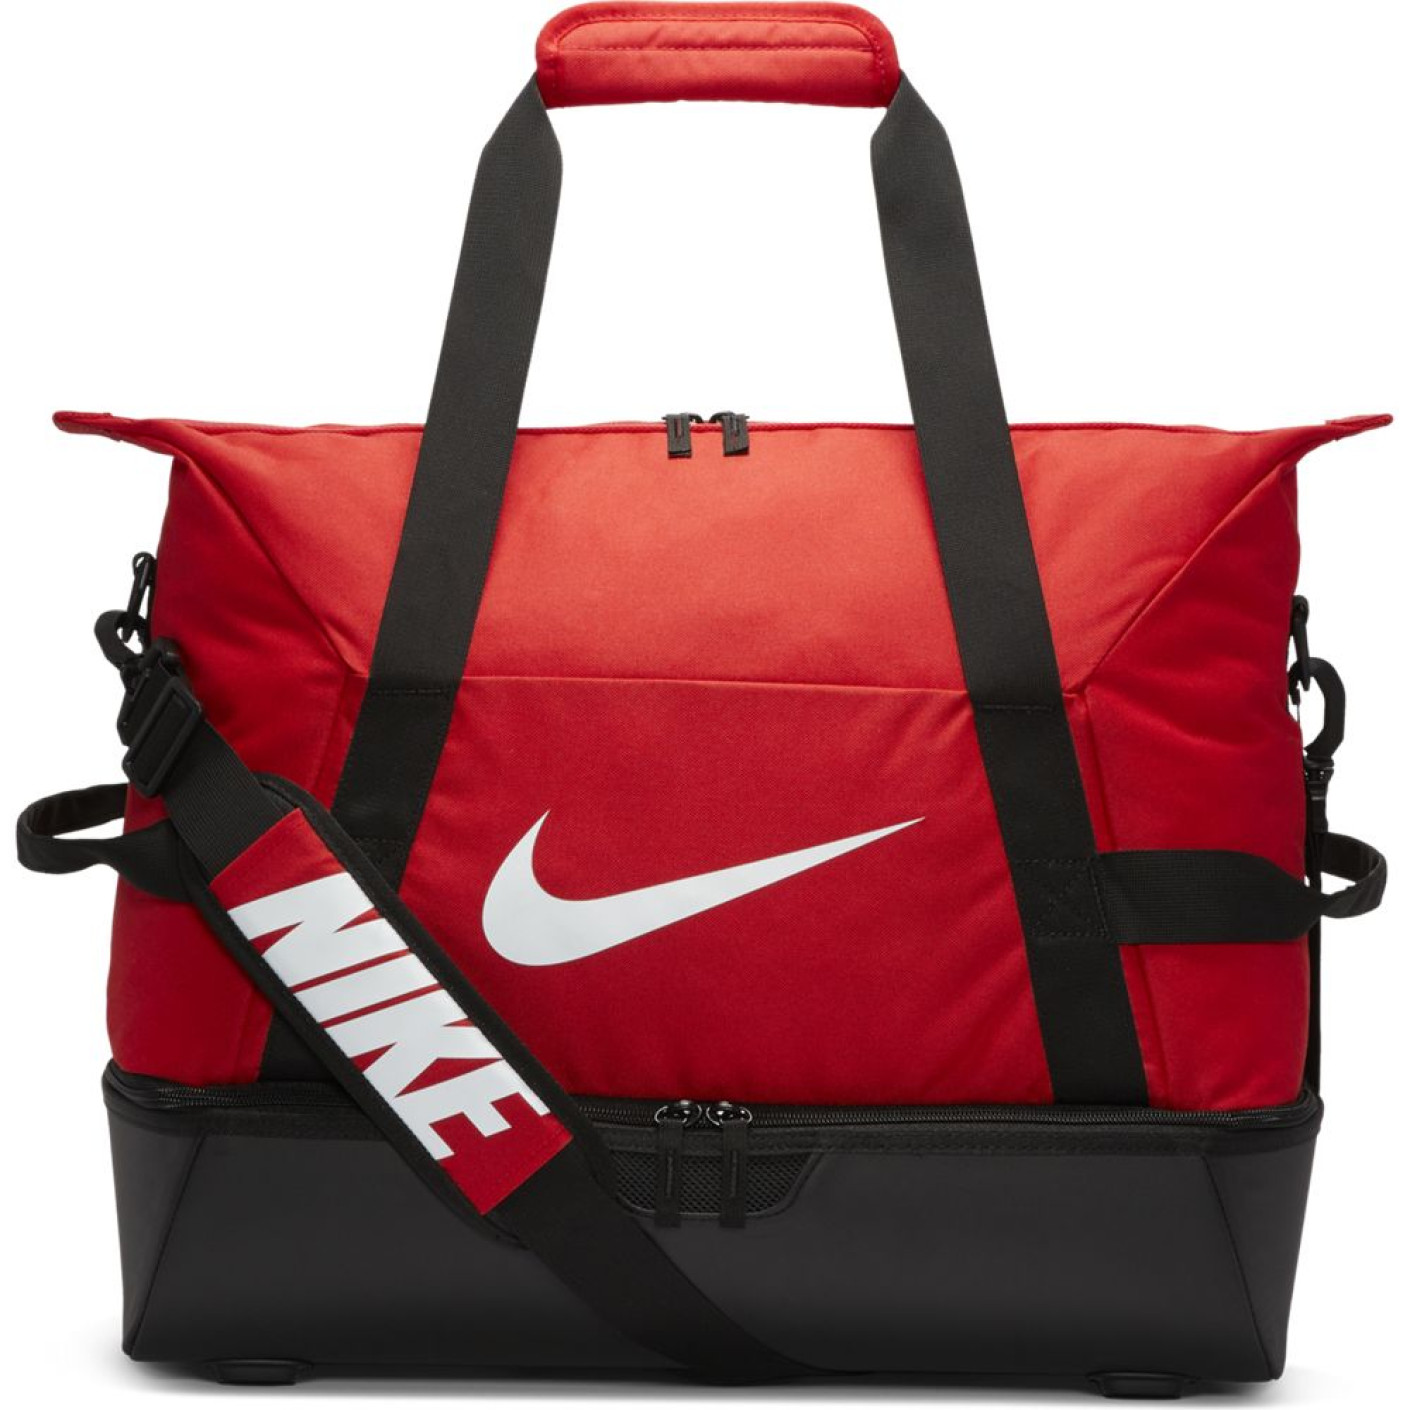 Sac de football Nike Academy Team Large Rouge